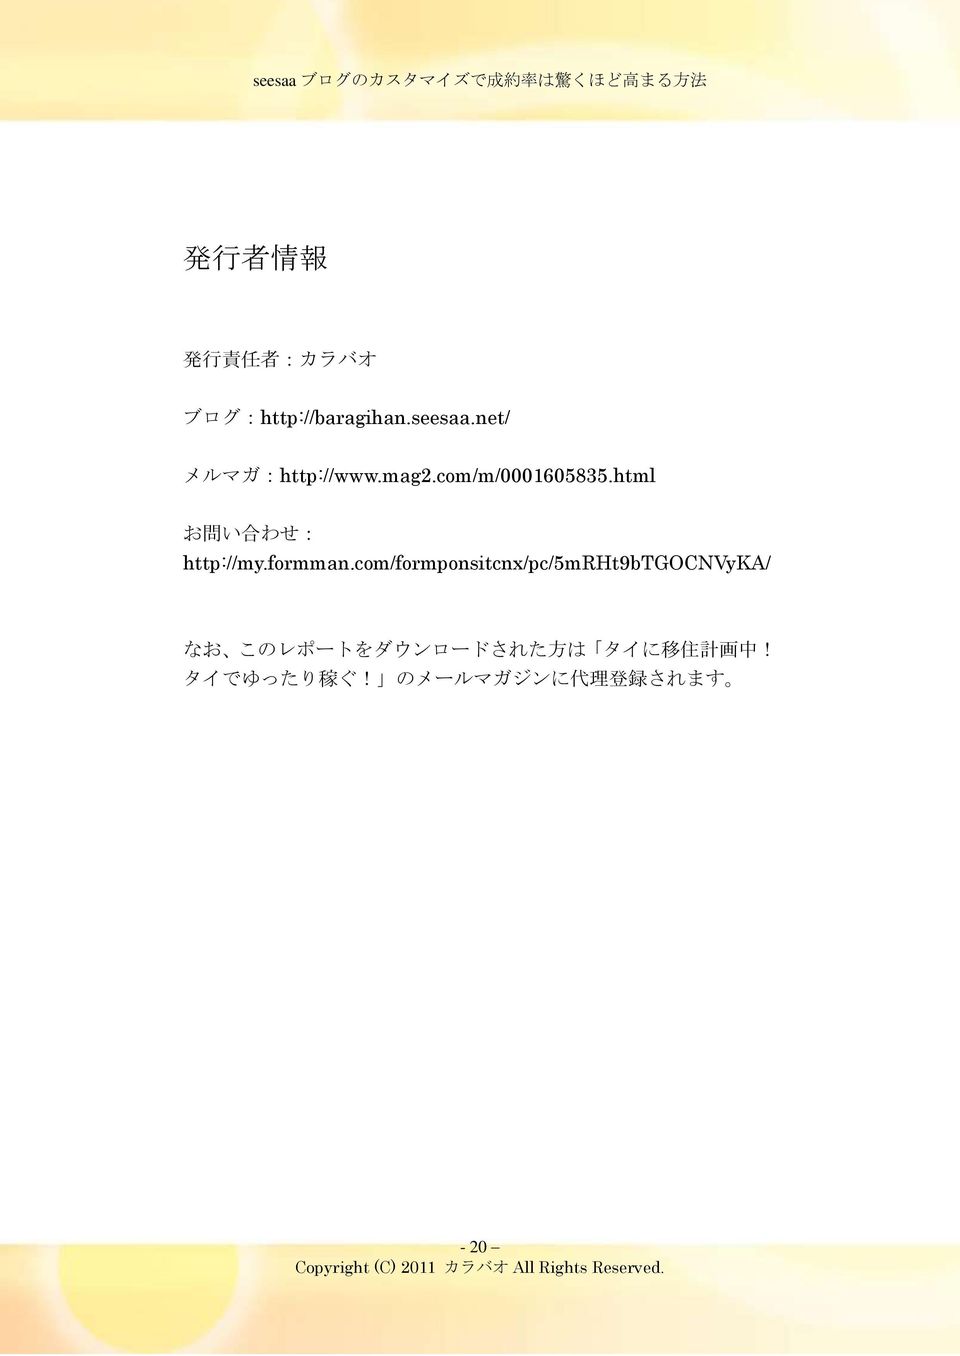 html お 問 い 合 わせ: http://my.formman.